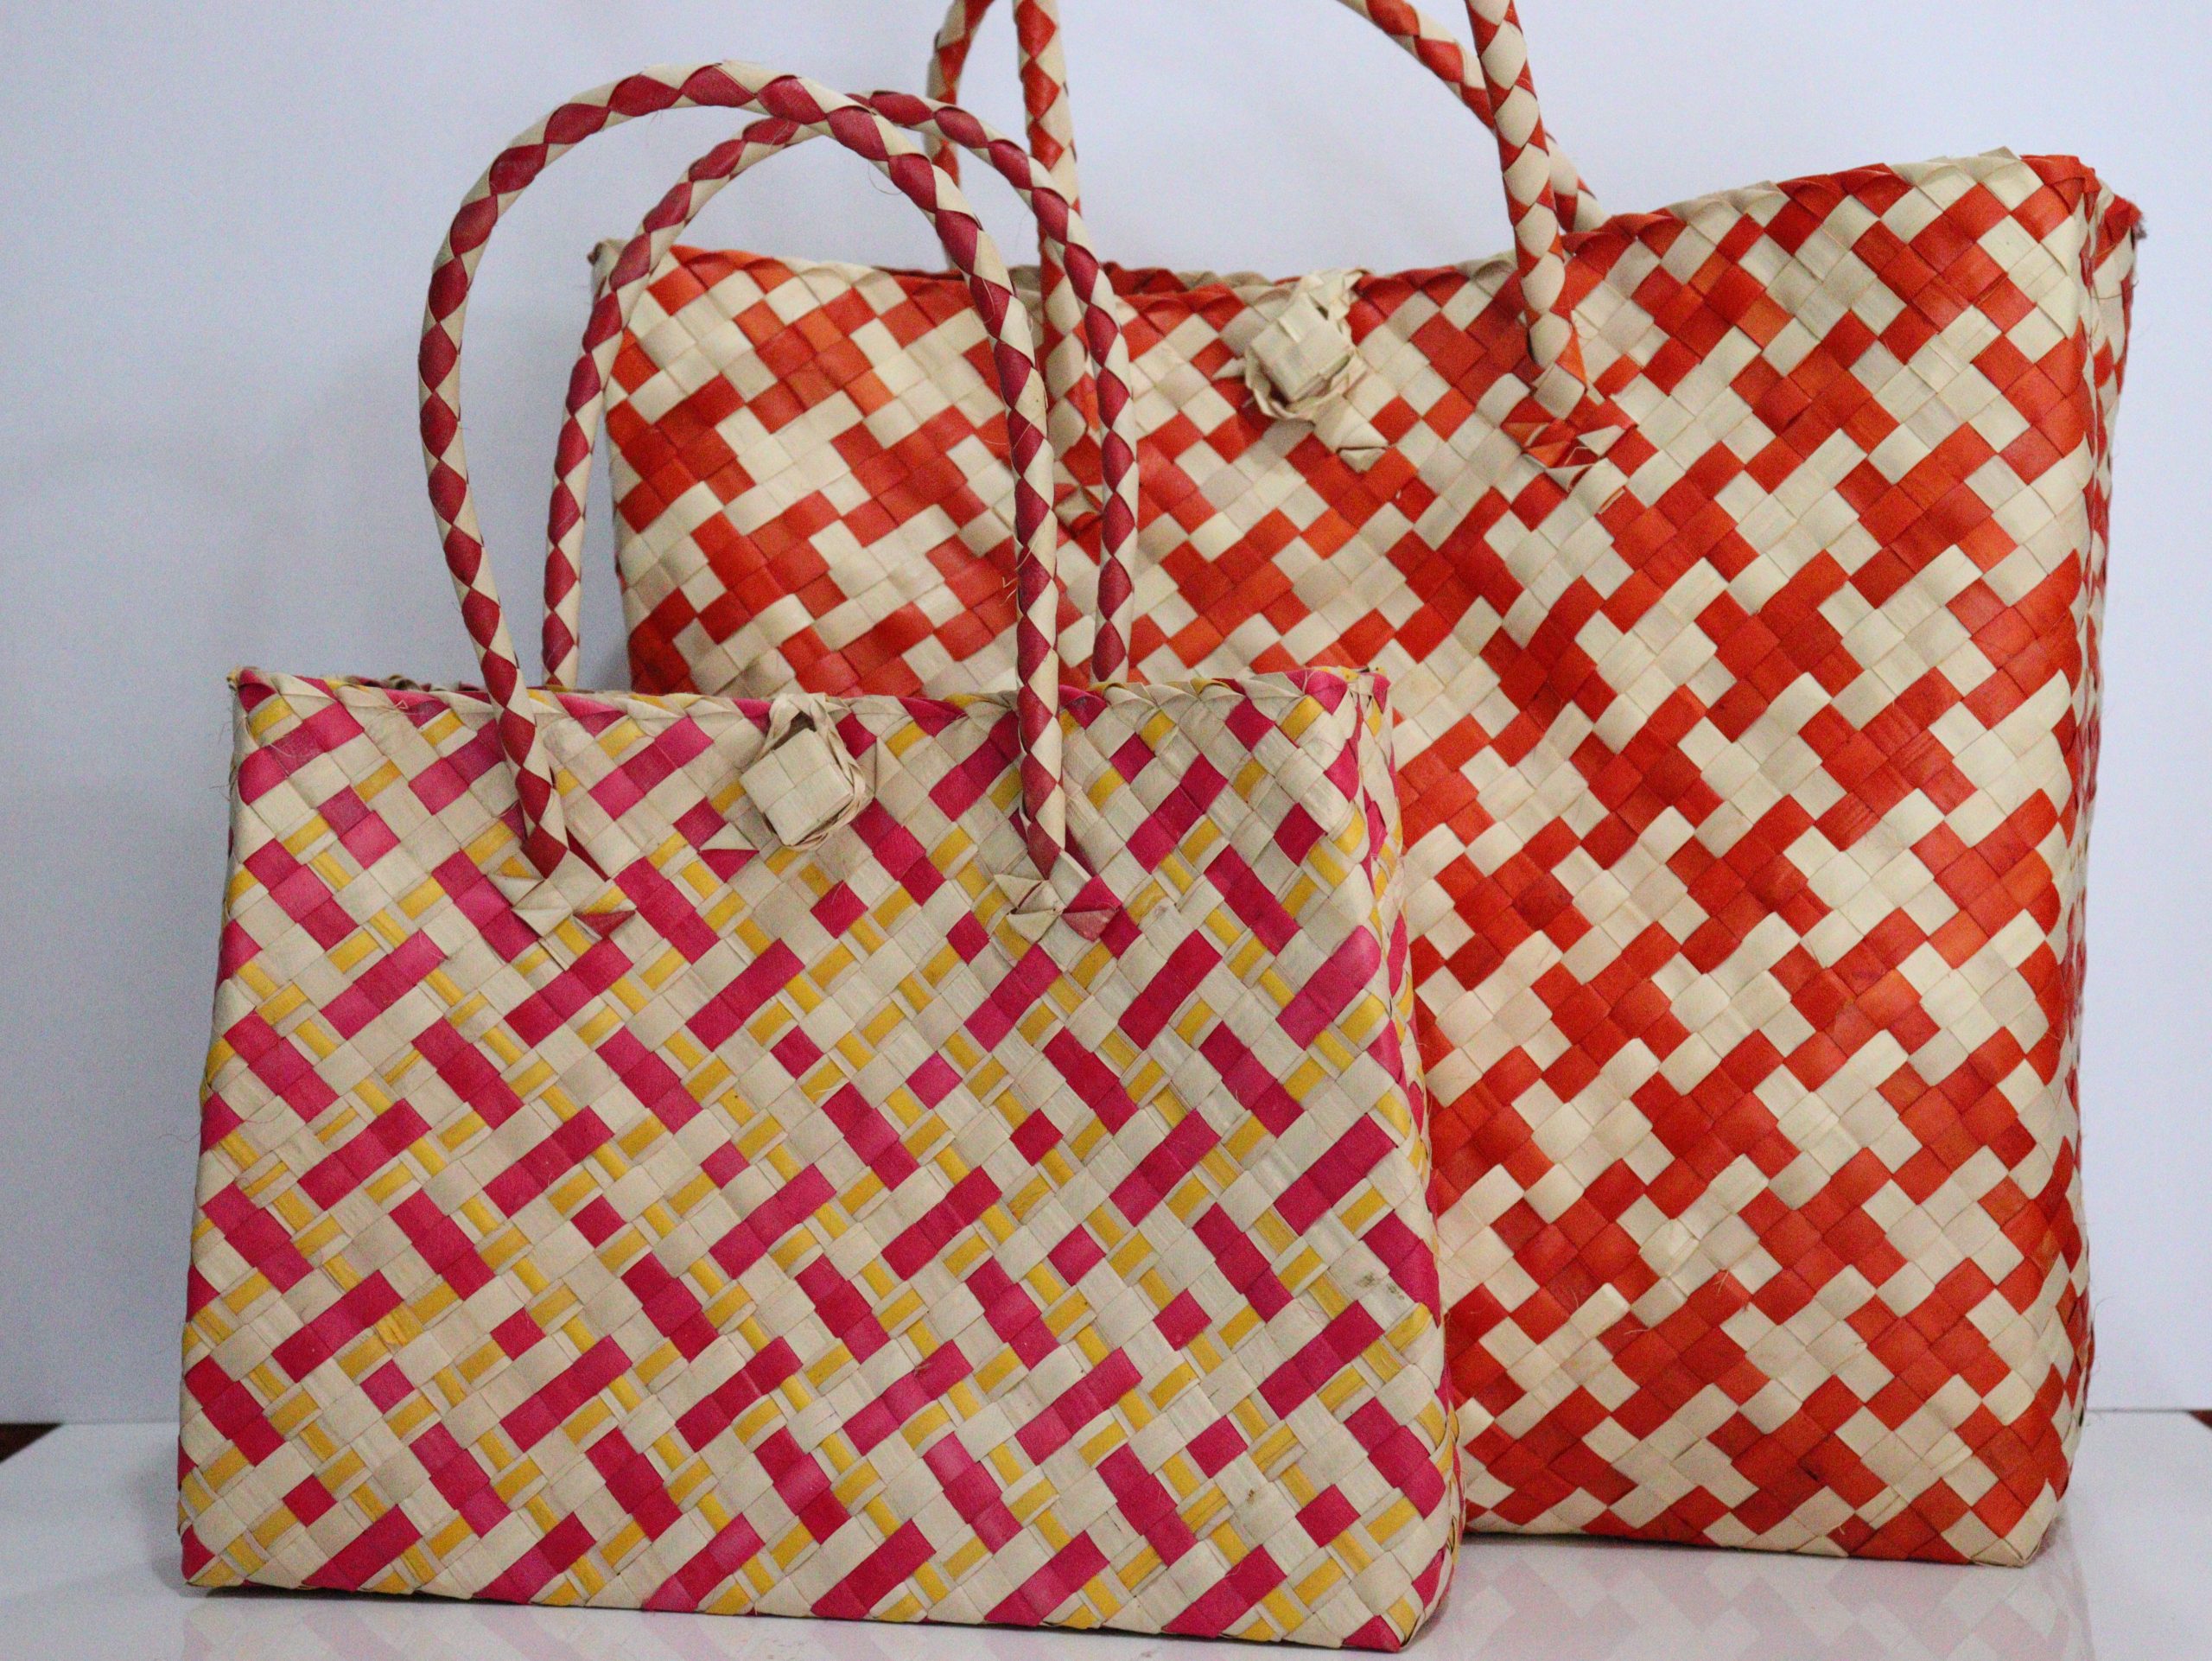 Ilocos Buri Bag - Assorted Colors - Co-opBiz